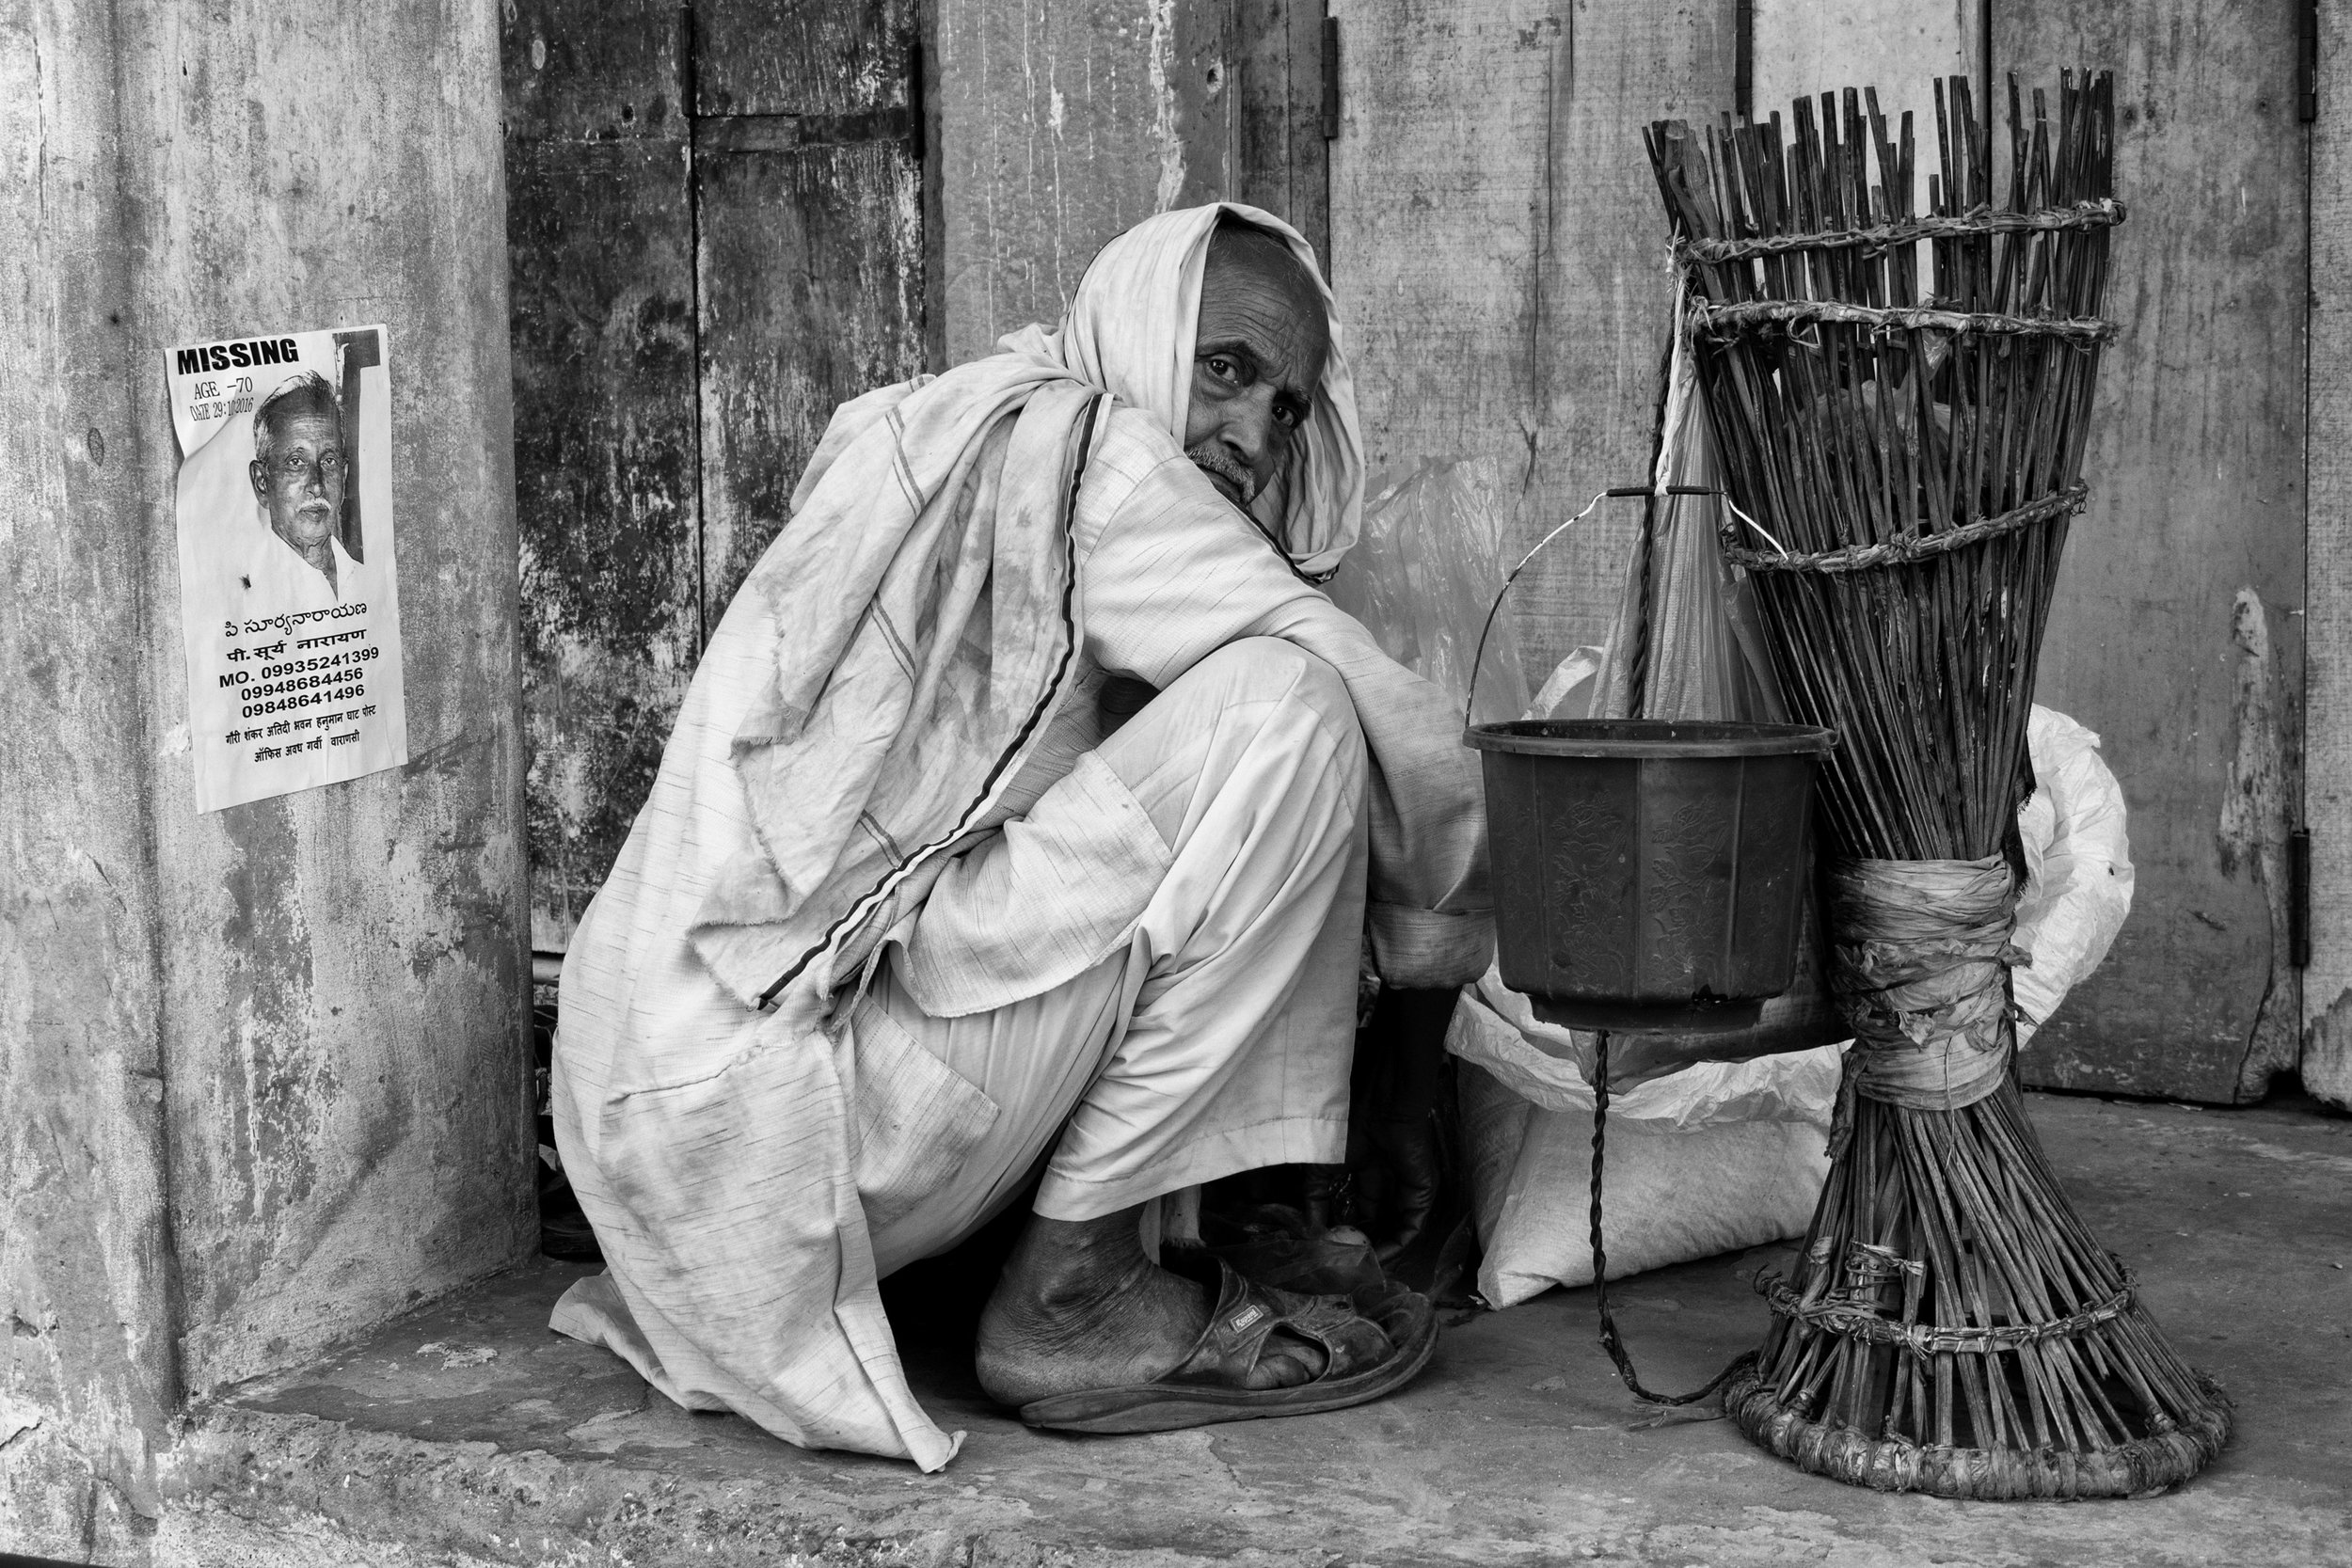 Man Crouched Down on Streets on Varanasi in Black and White - Varanasi, India - Copyright 2016 Ralph Velasco.jpg